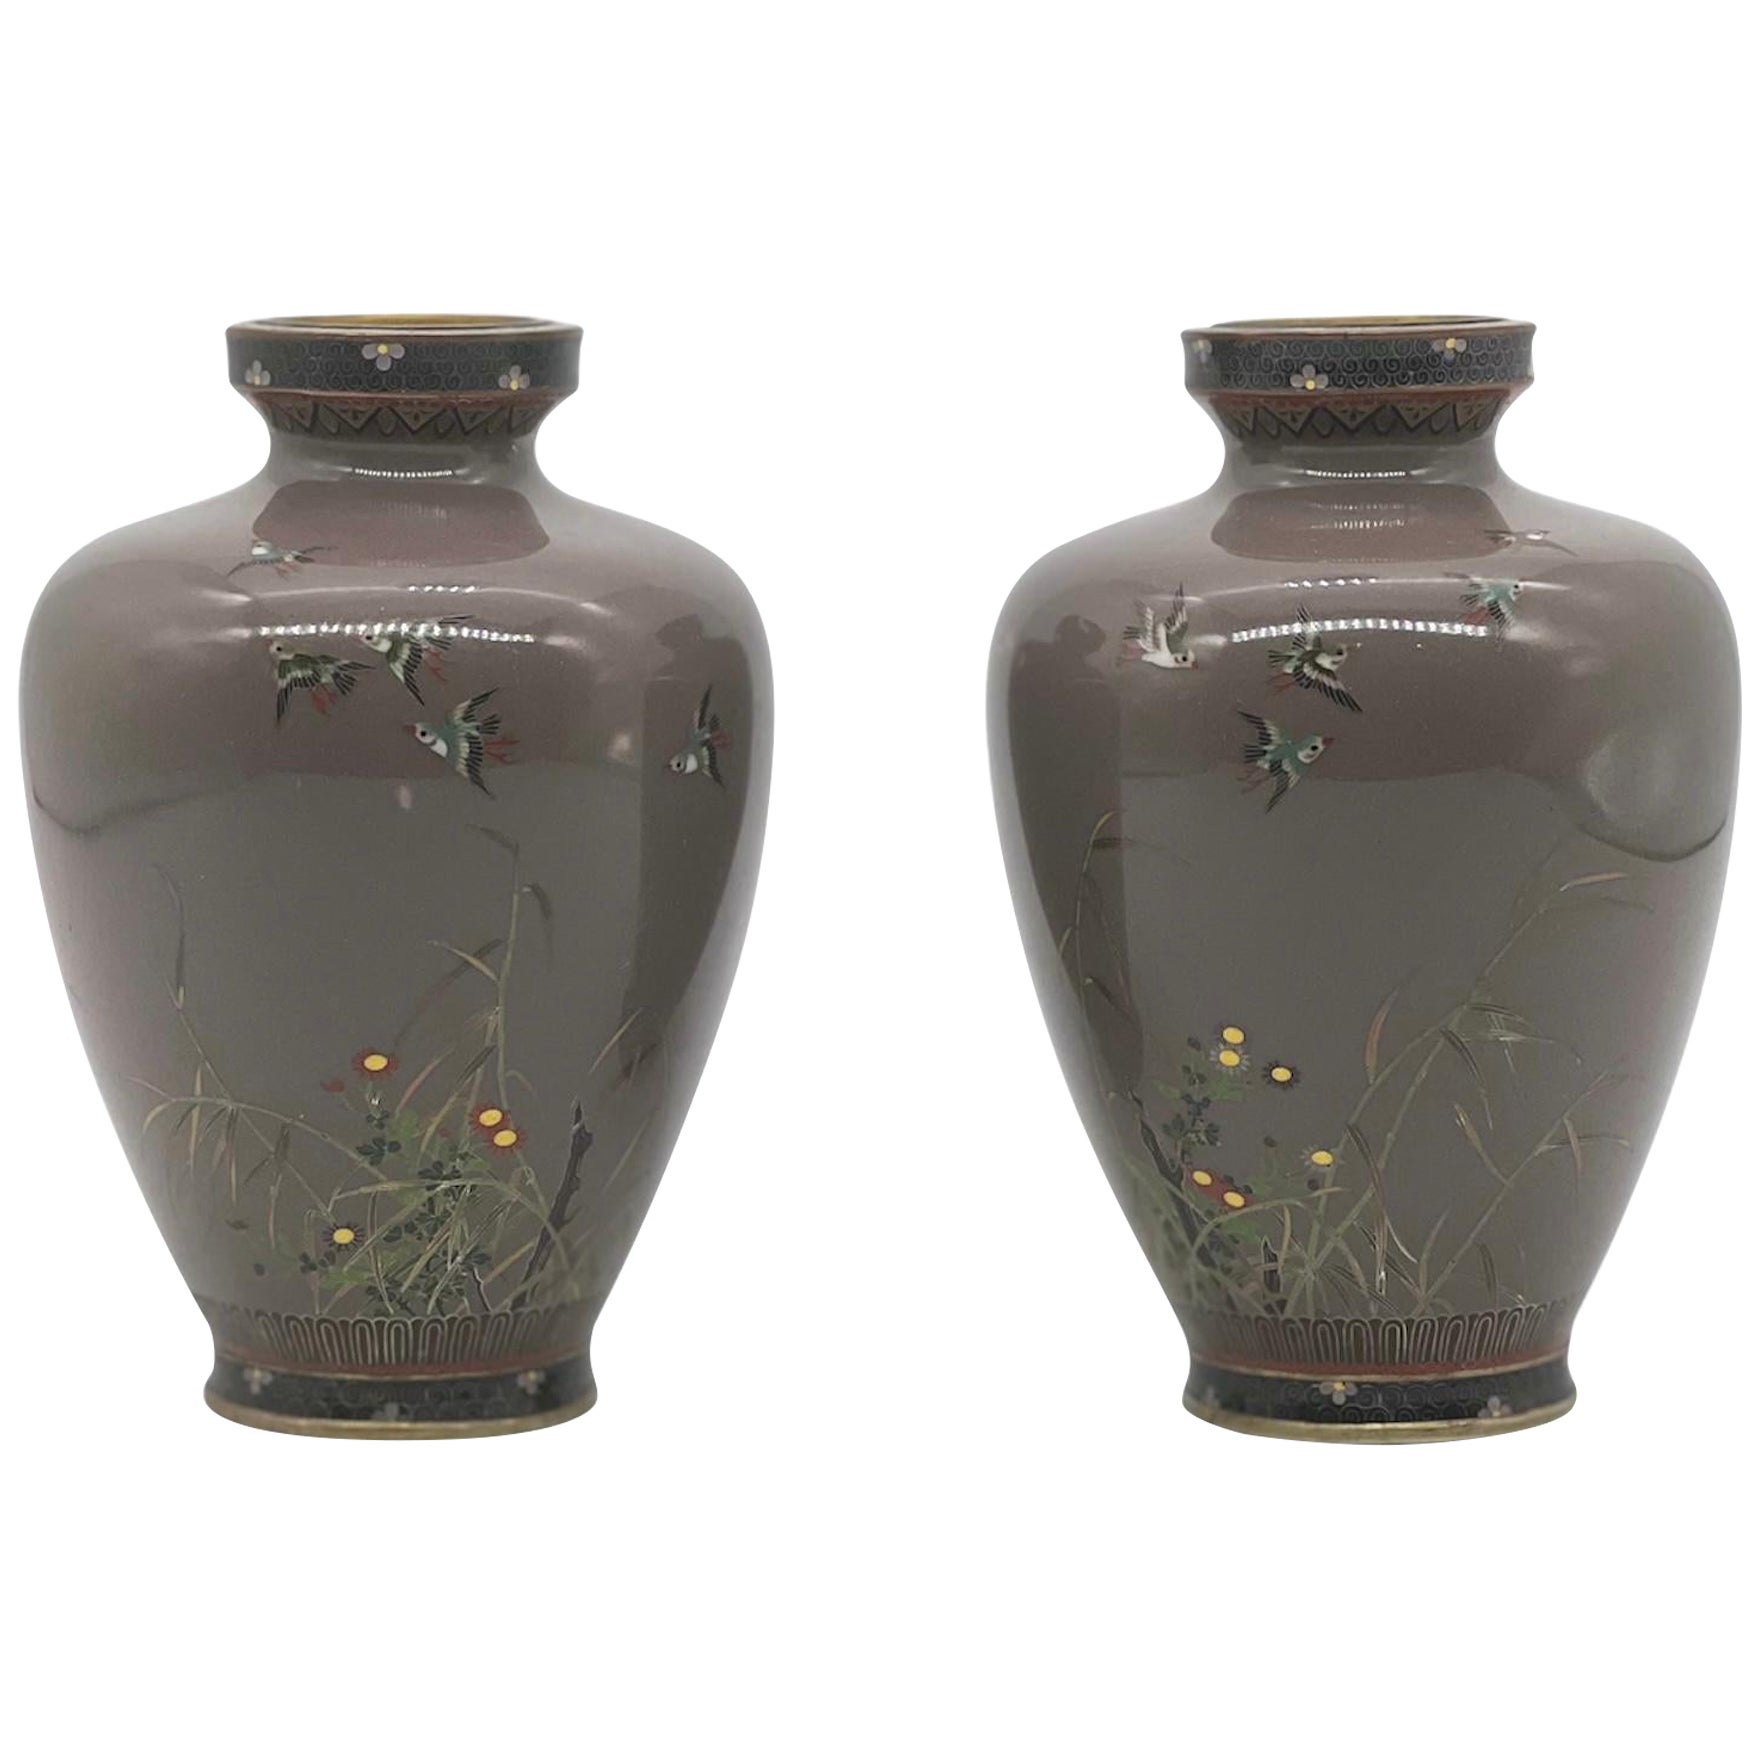 A Fine Pair of Japanese Cloisonne Enamel Vases Attributed to Hayashi Kodenji